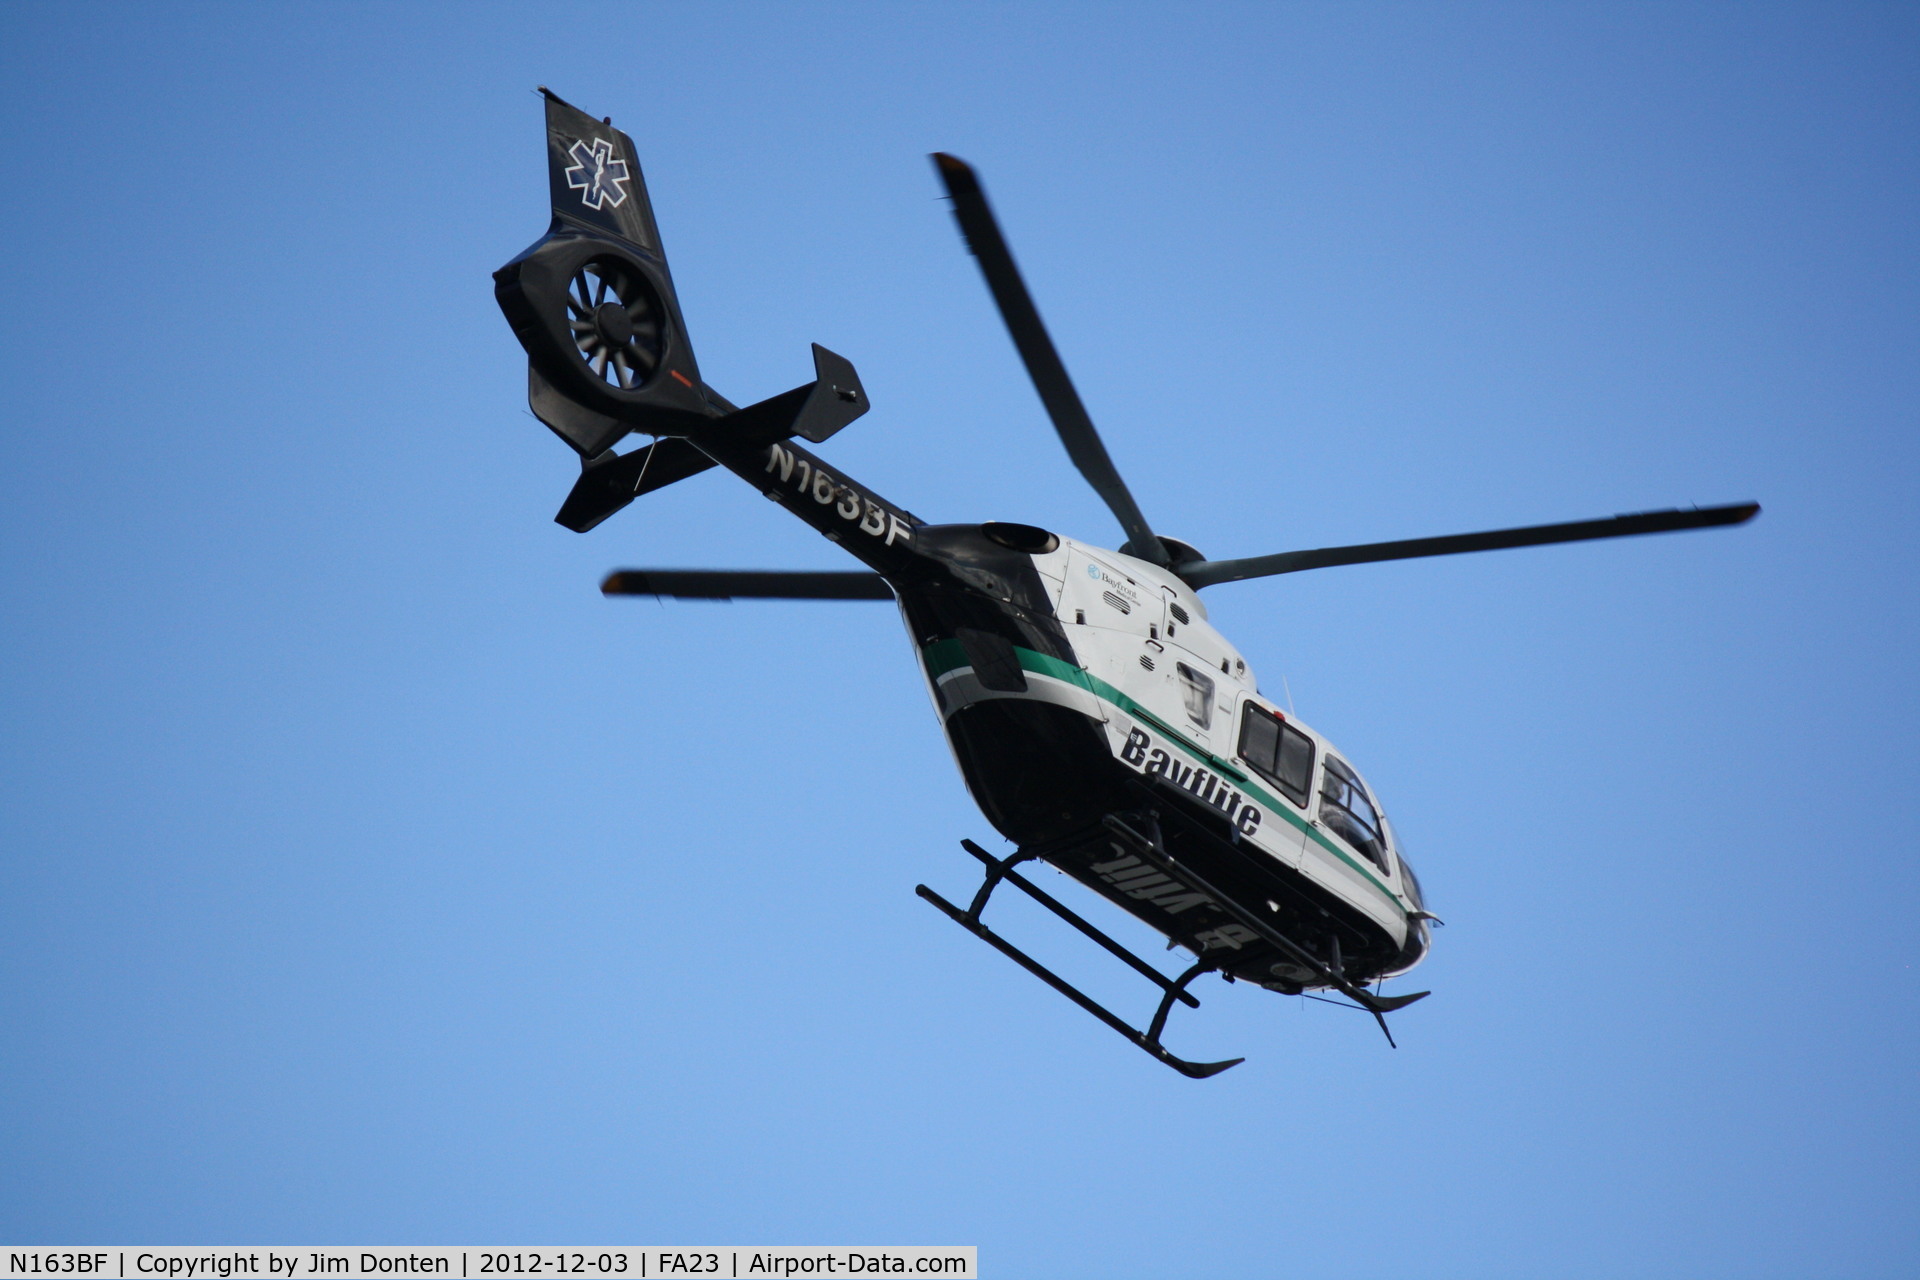 N163BF, Eurocopter EC-135P-2+ C/N 0671, Bayflite 2 (N163BF) prepares for departs from the roof of Sarasota Memorial Hospital